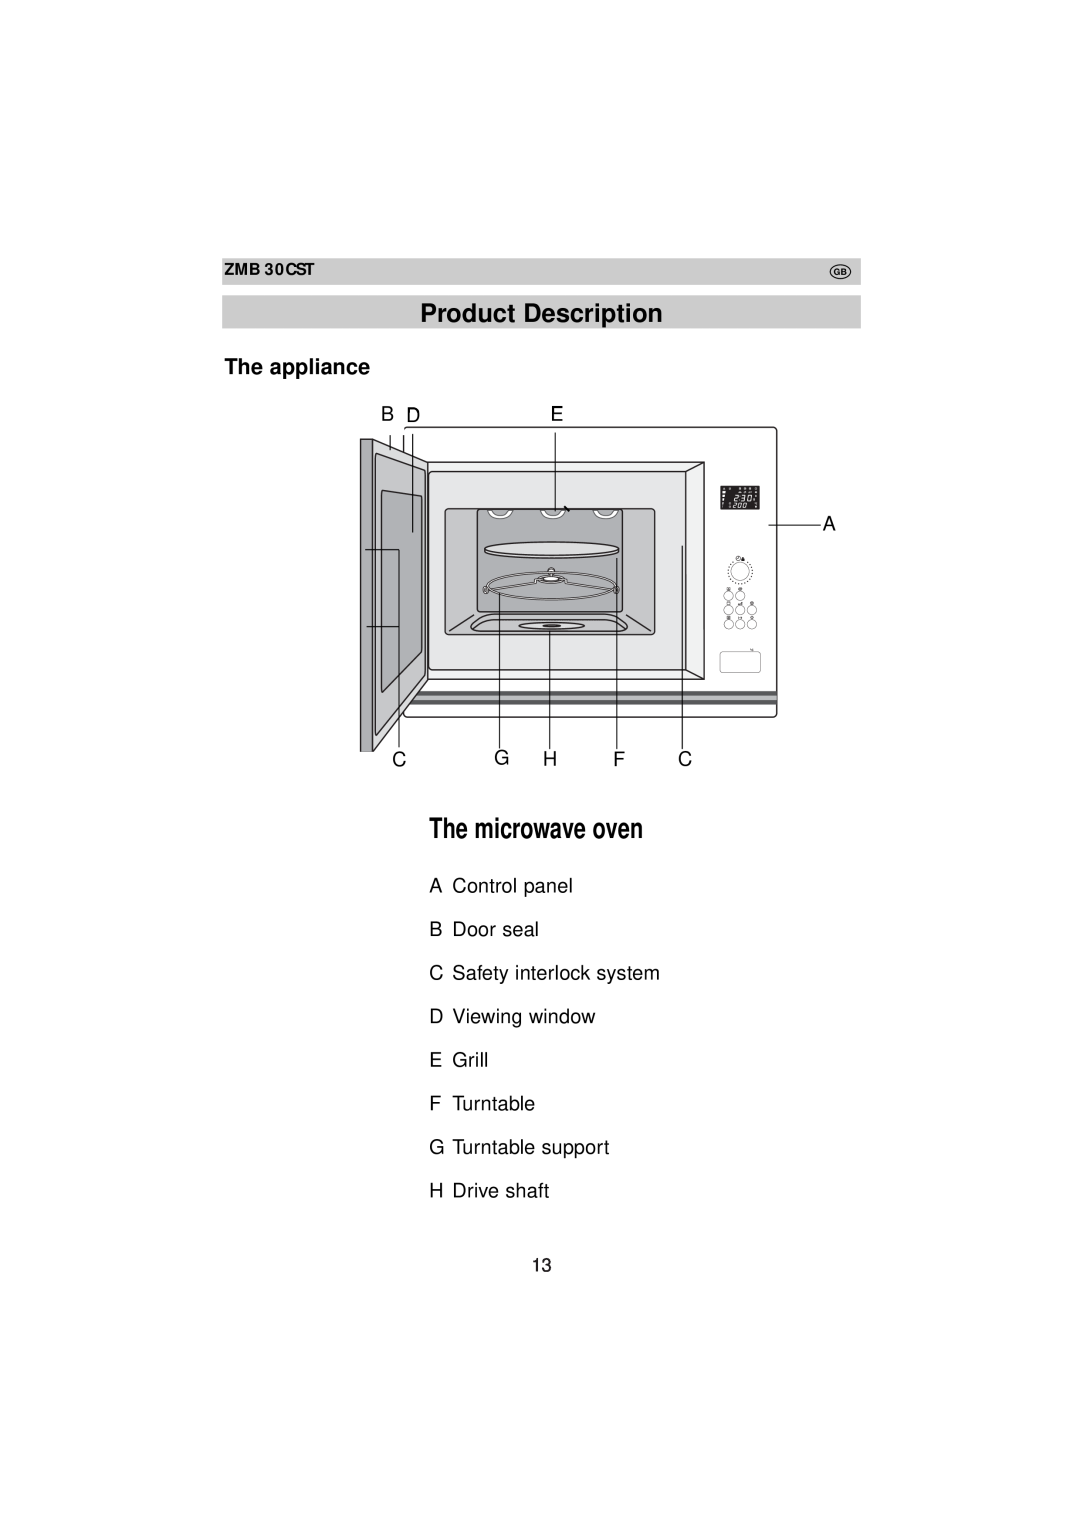 Zanussi ZMB 30 CST Product Description, The appliance, The microwave oven, B De A, H Drive shaft, ZMB 30CST 